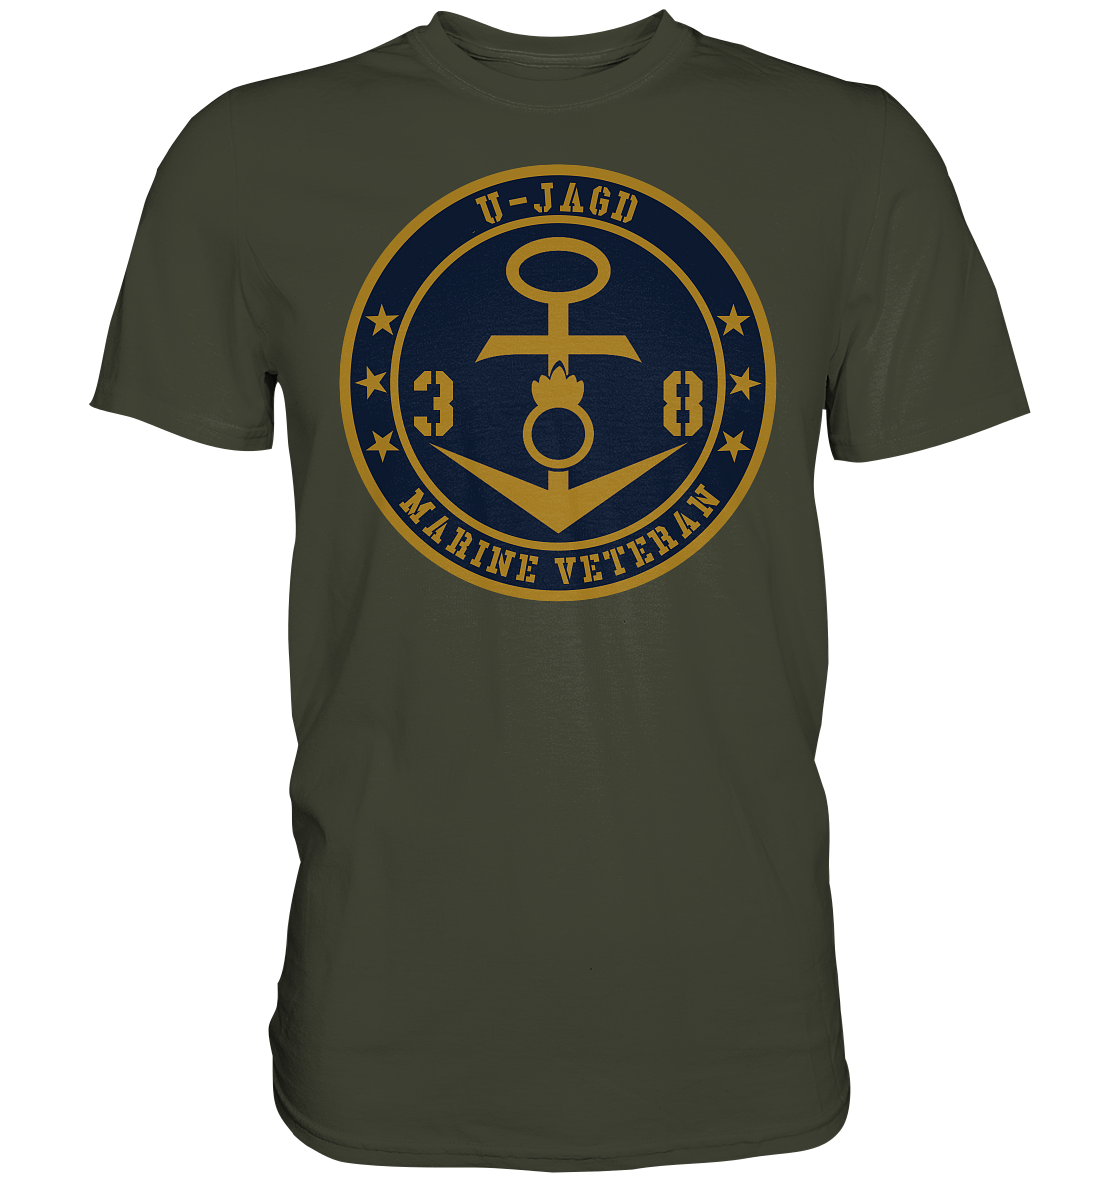 Marine Veteran 38er U-JAGD - Premium Shirt